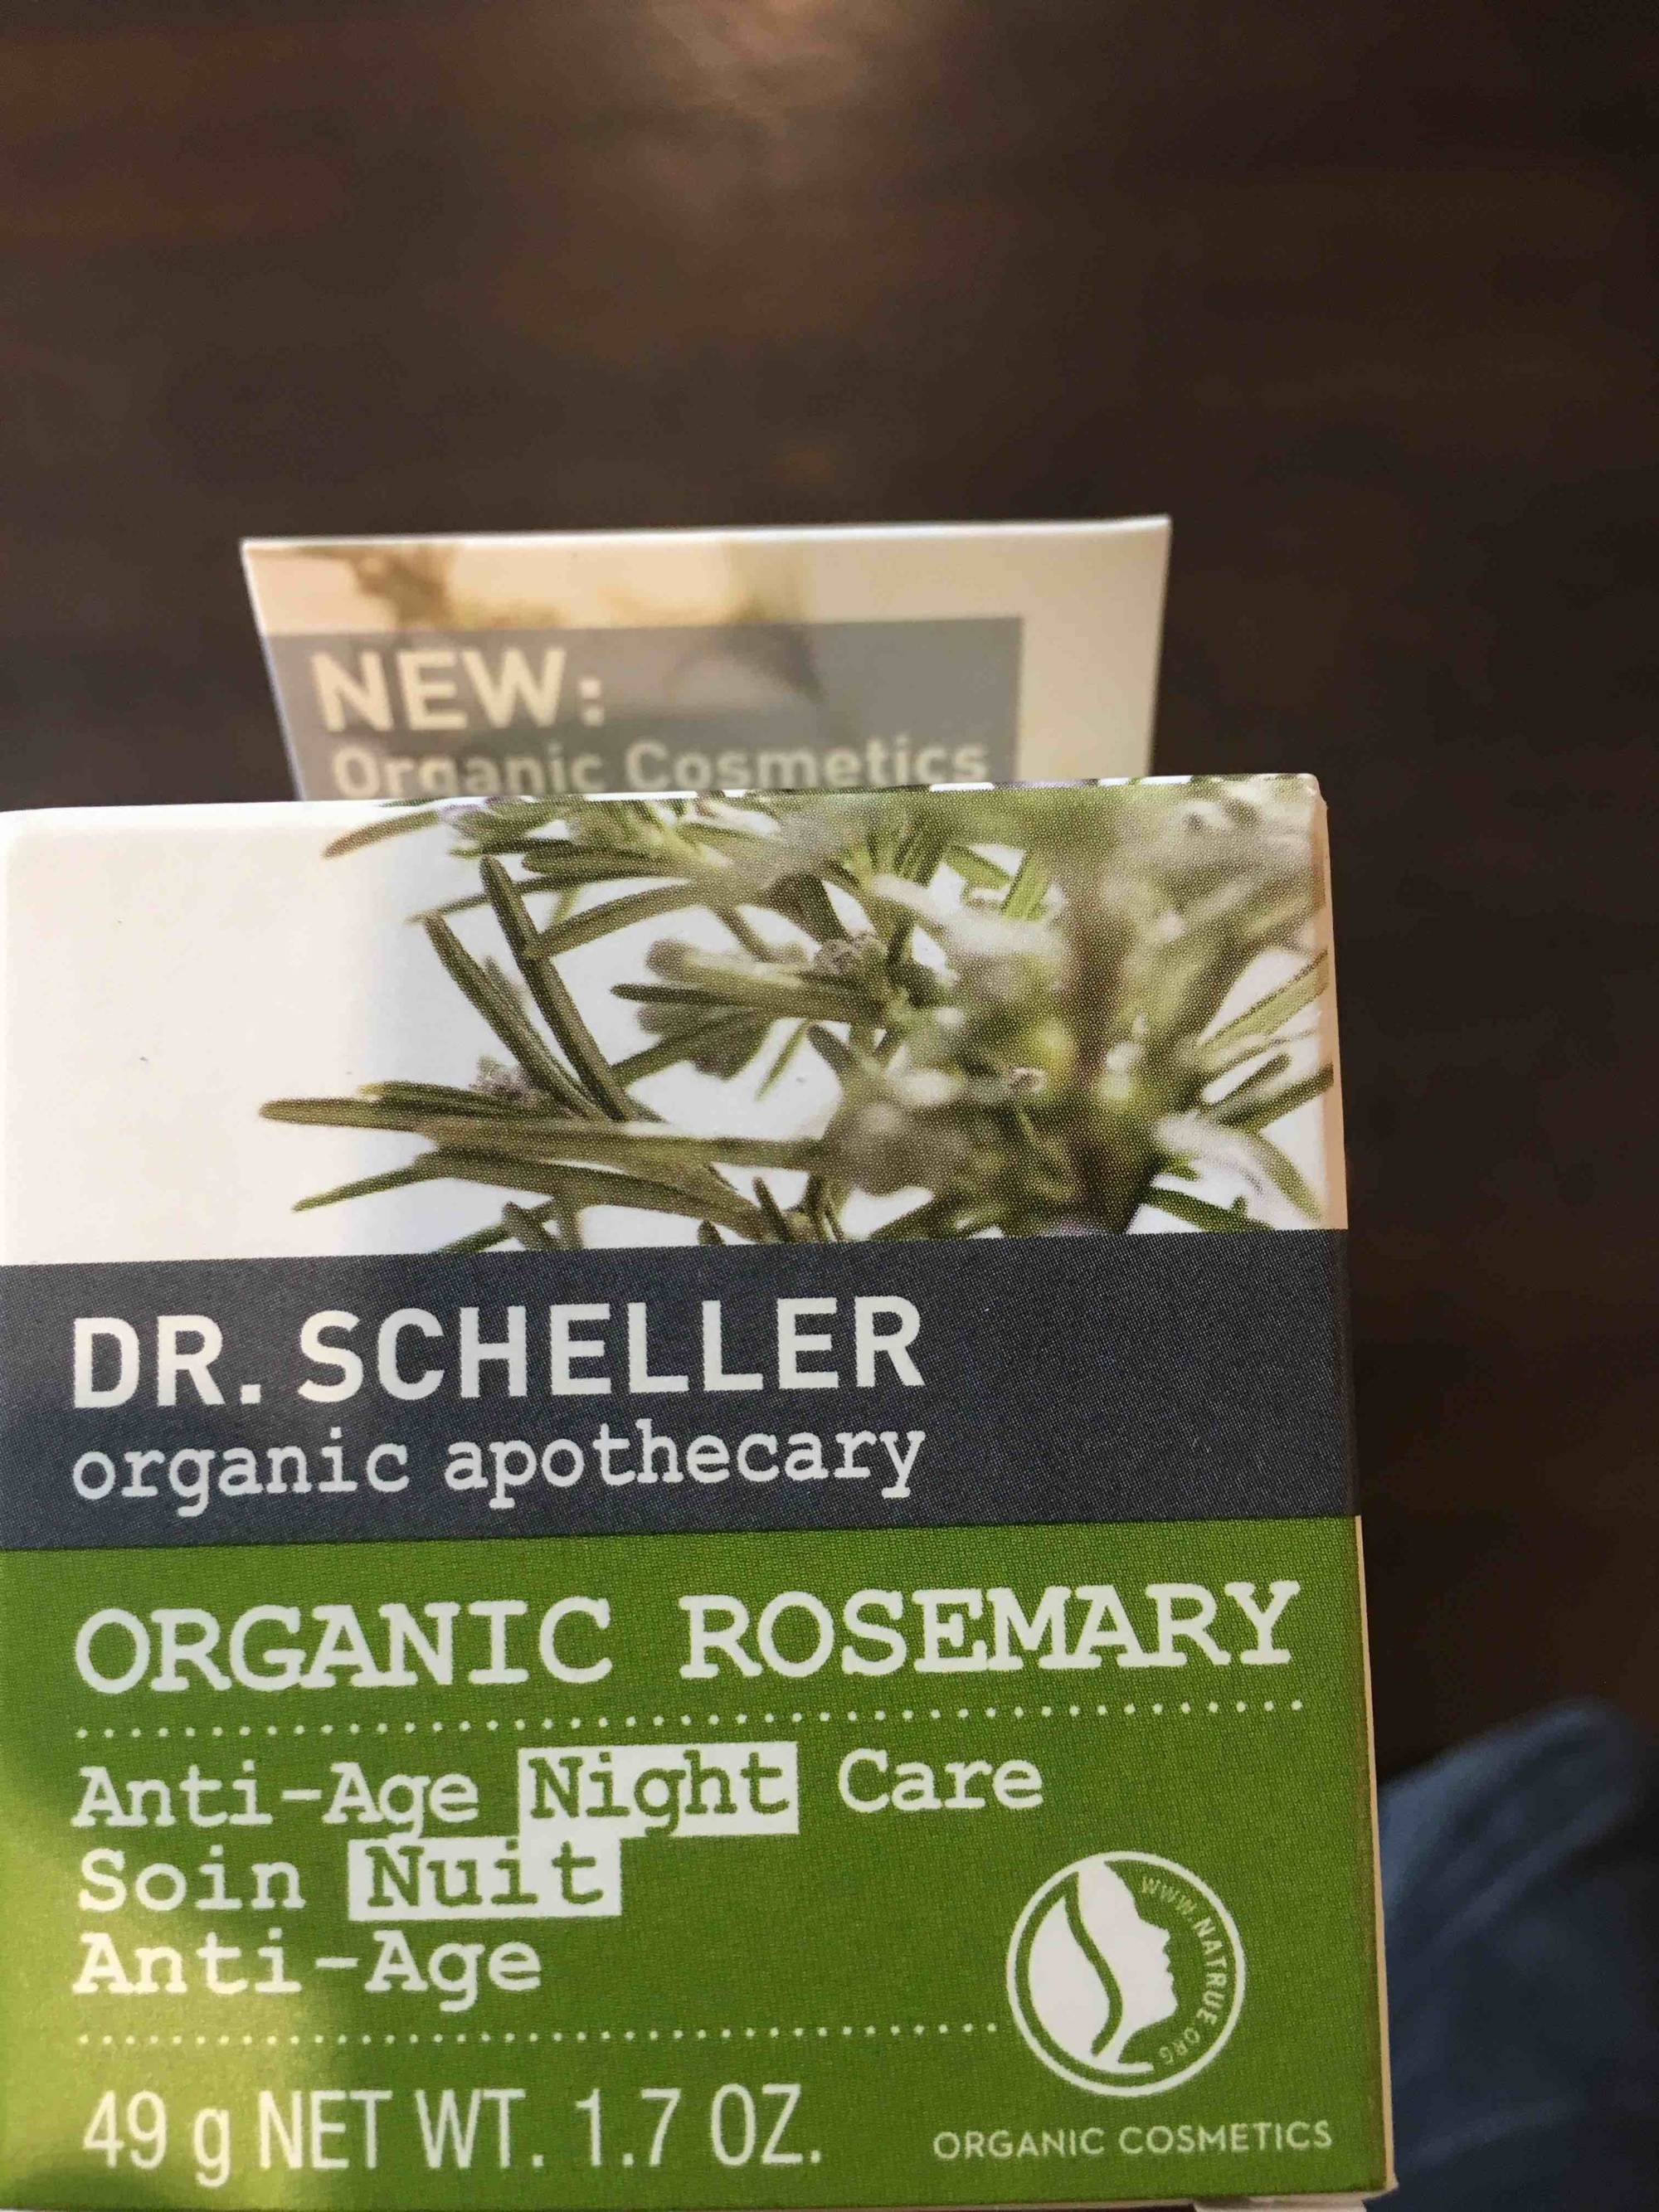 DR. SCHELLER - Organic rosemary - Soin nuit anti-age